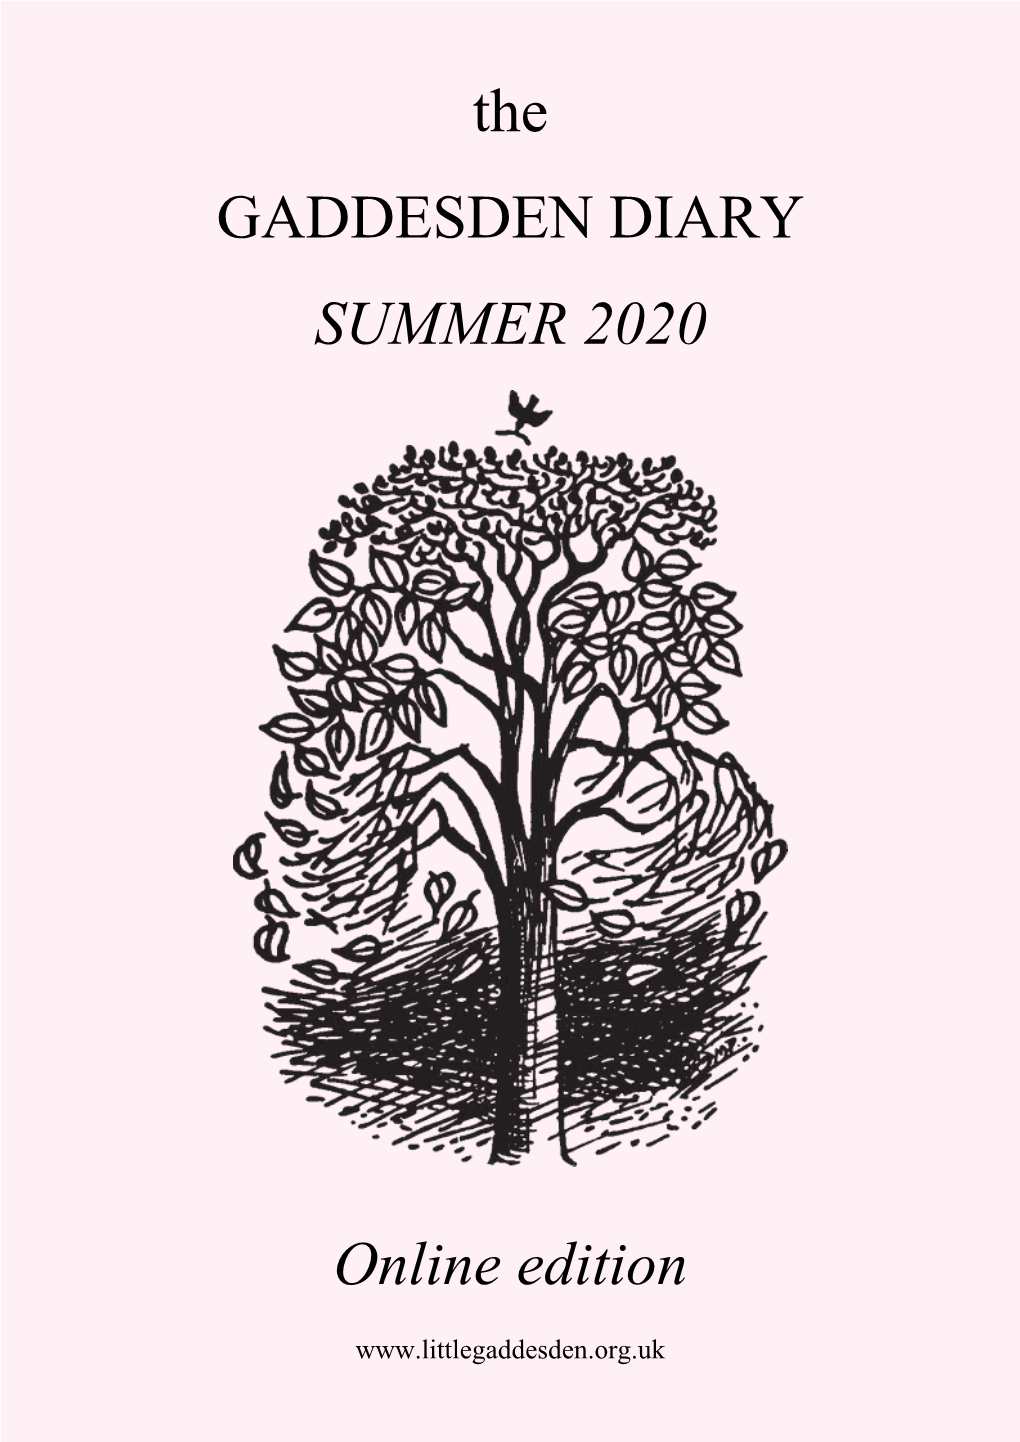 The GADDESDEN DIARY SUMMER 2020 Online Edition